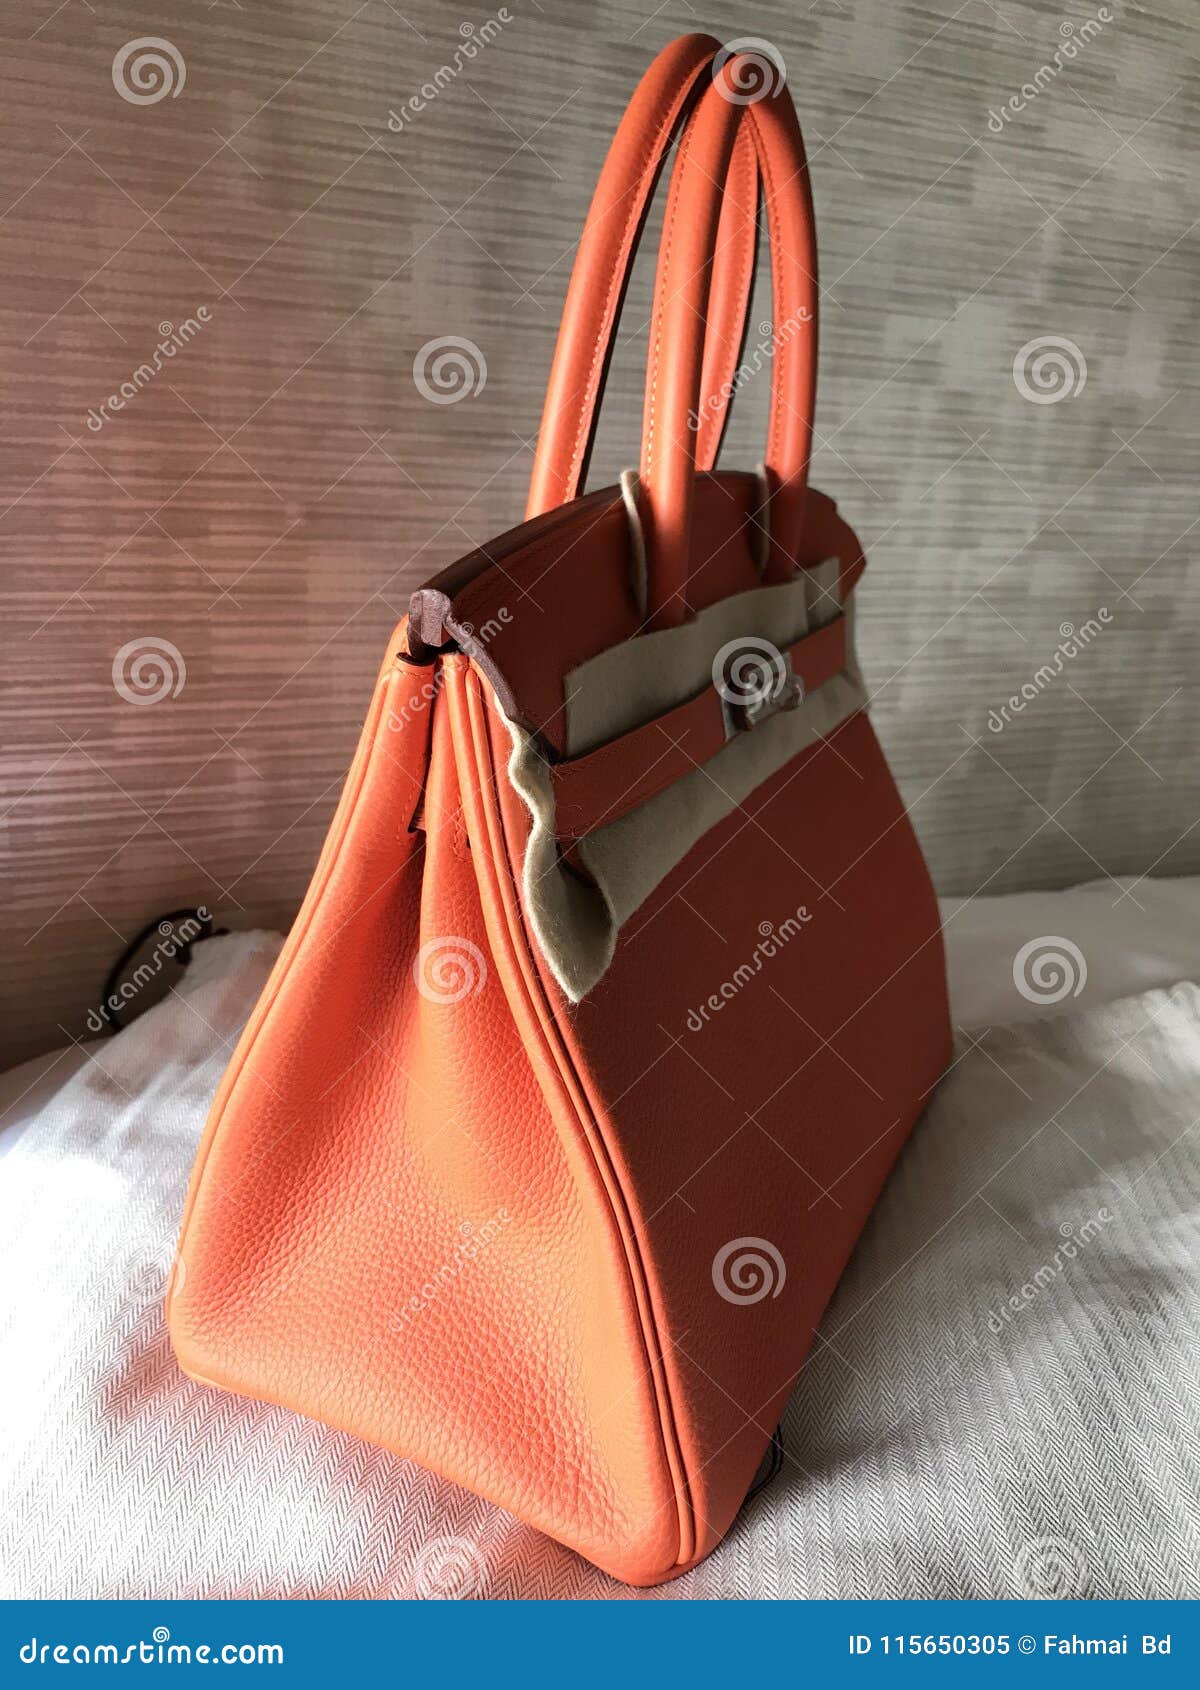 Hermes Birkin Size 30 Togo Leather Luxury Shopping Bag Editorial